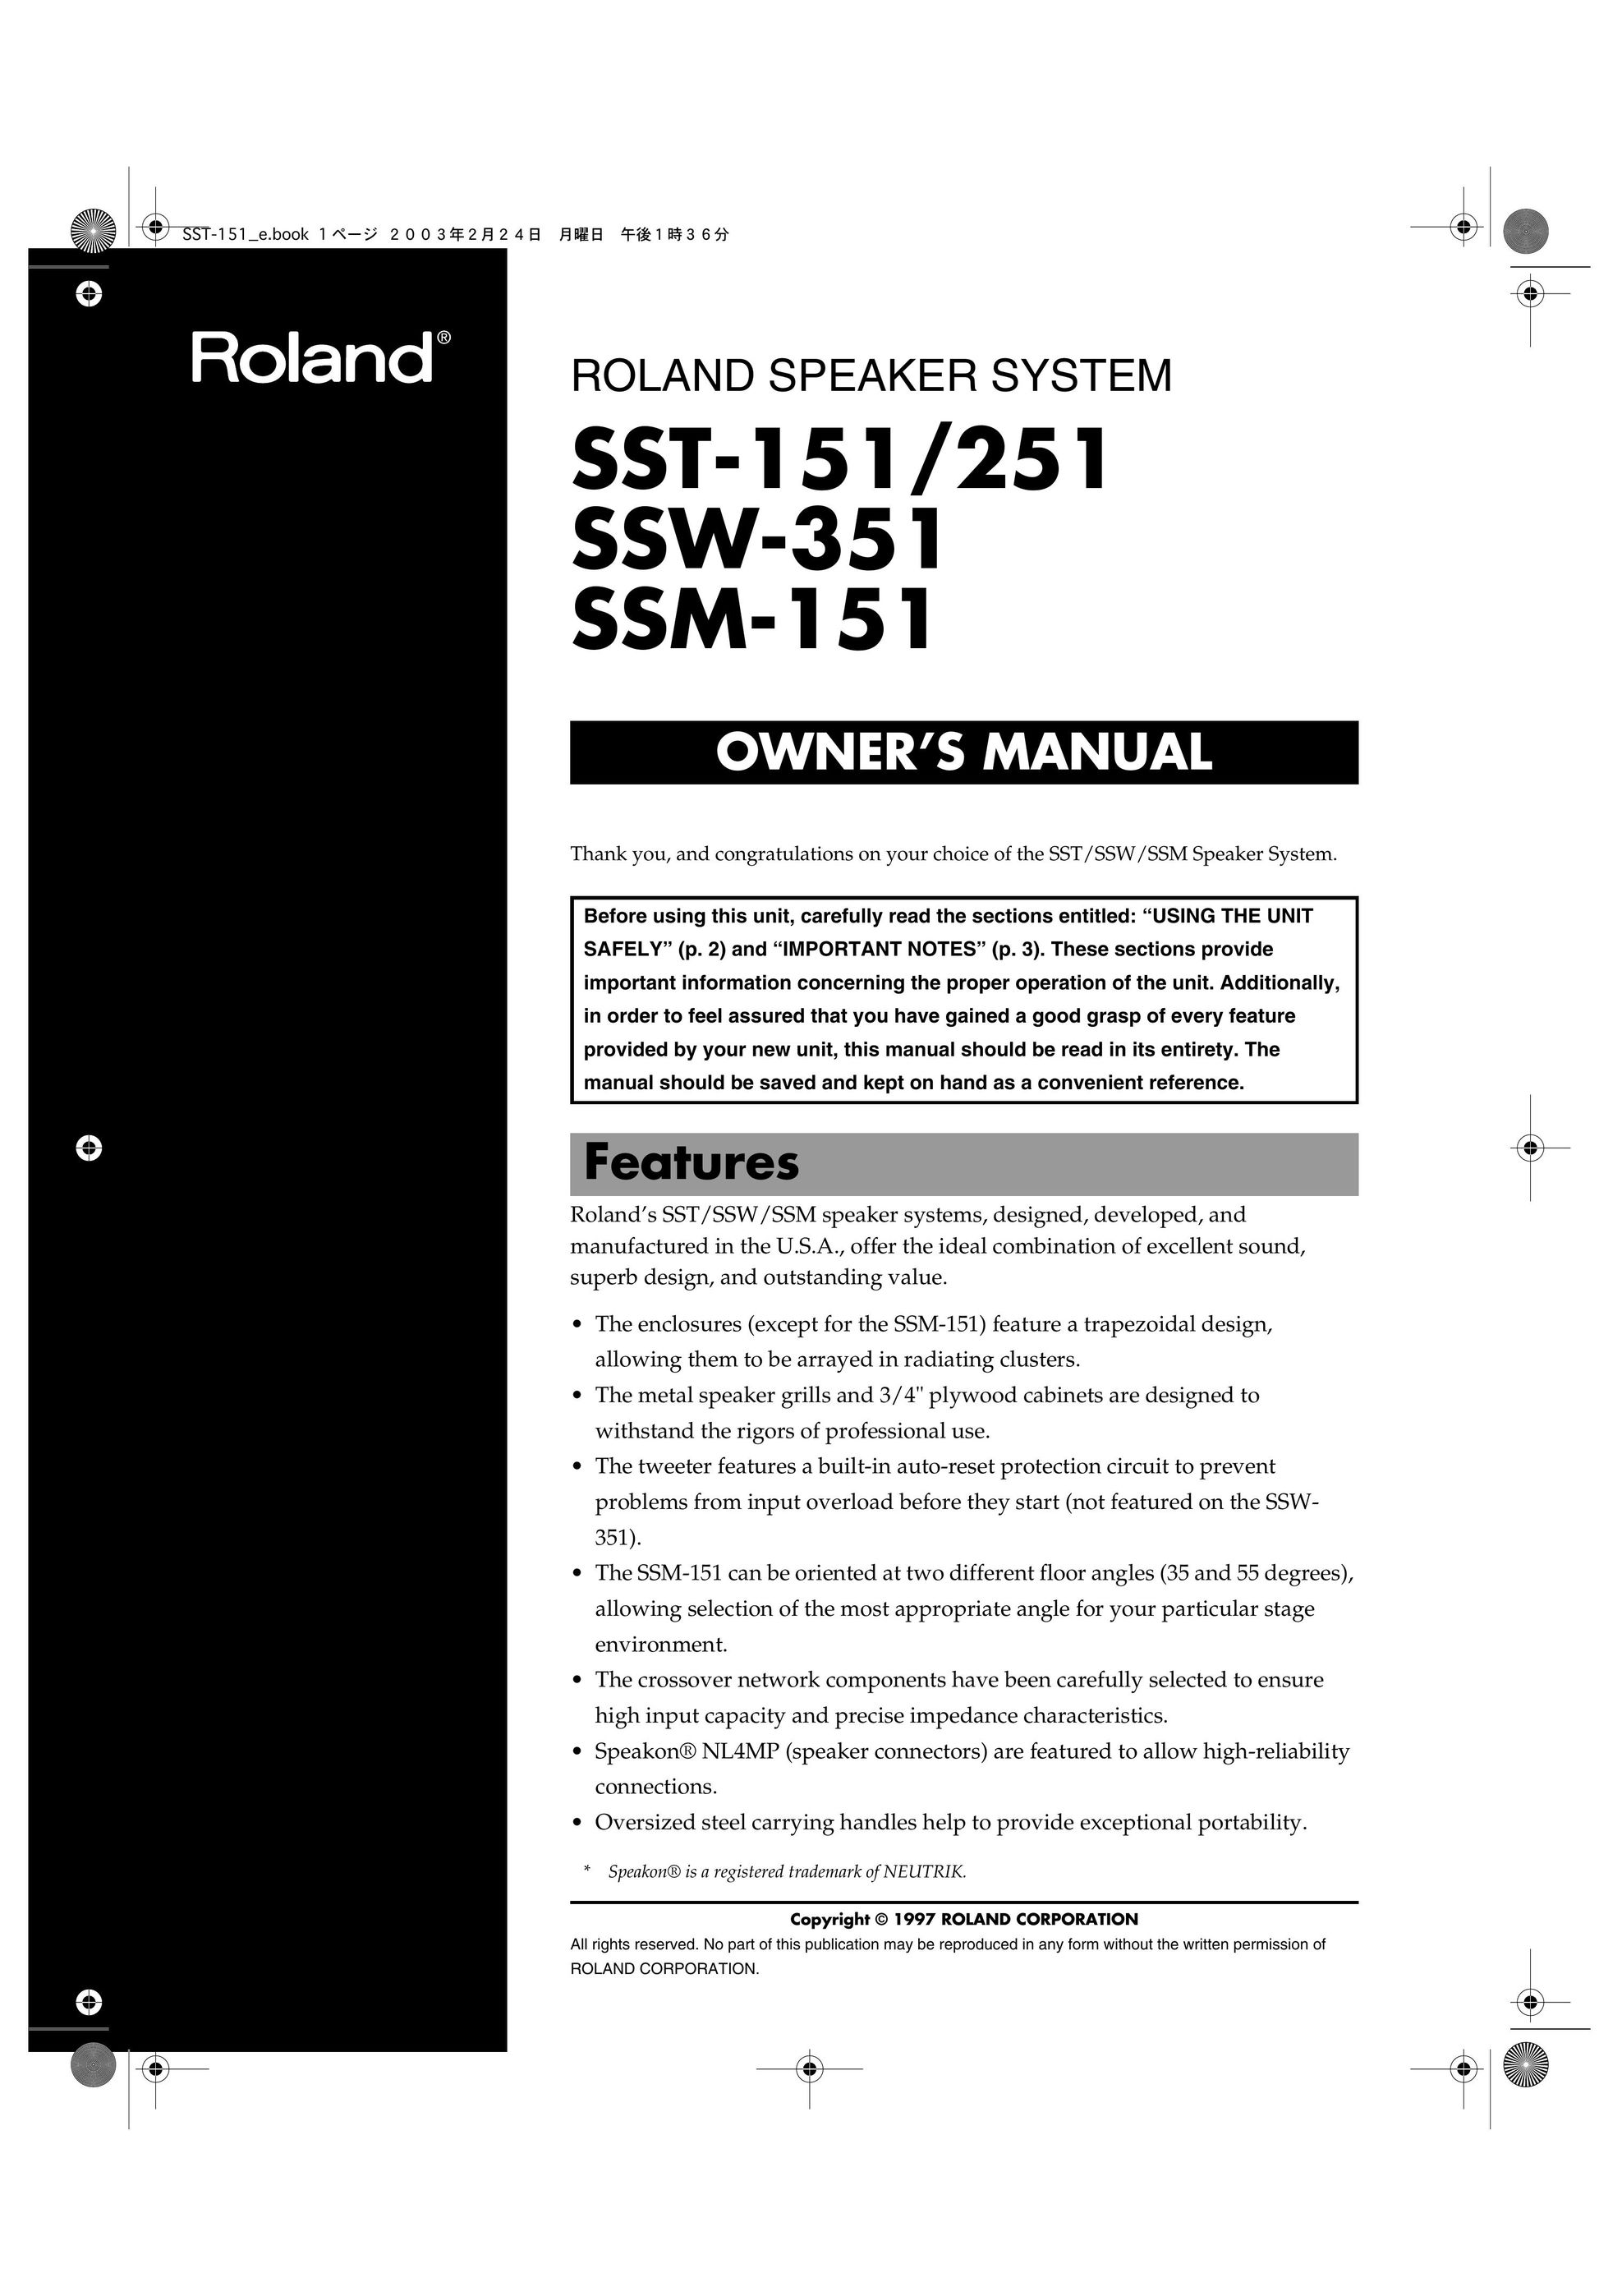 Roland SSW-351 Portable Speaker User Manual